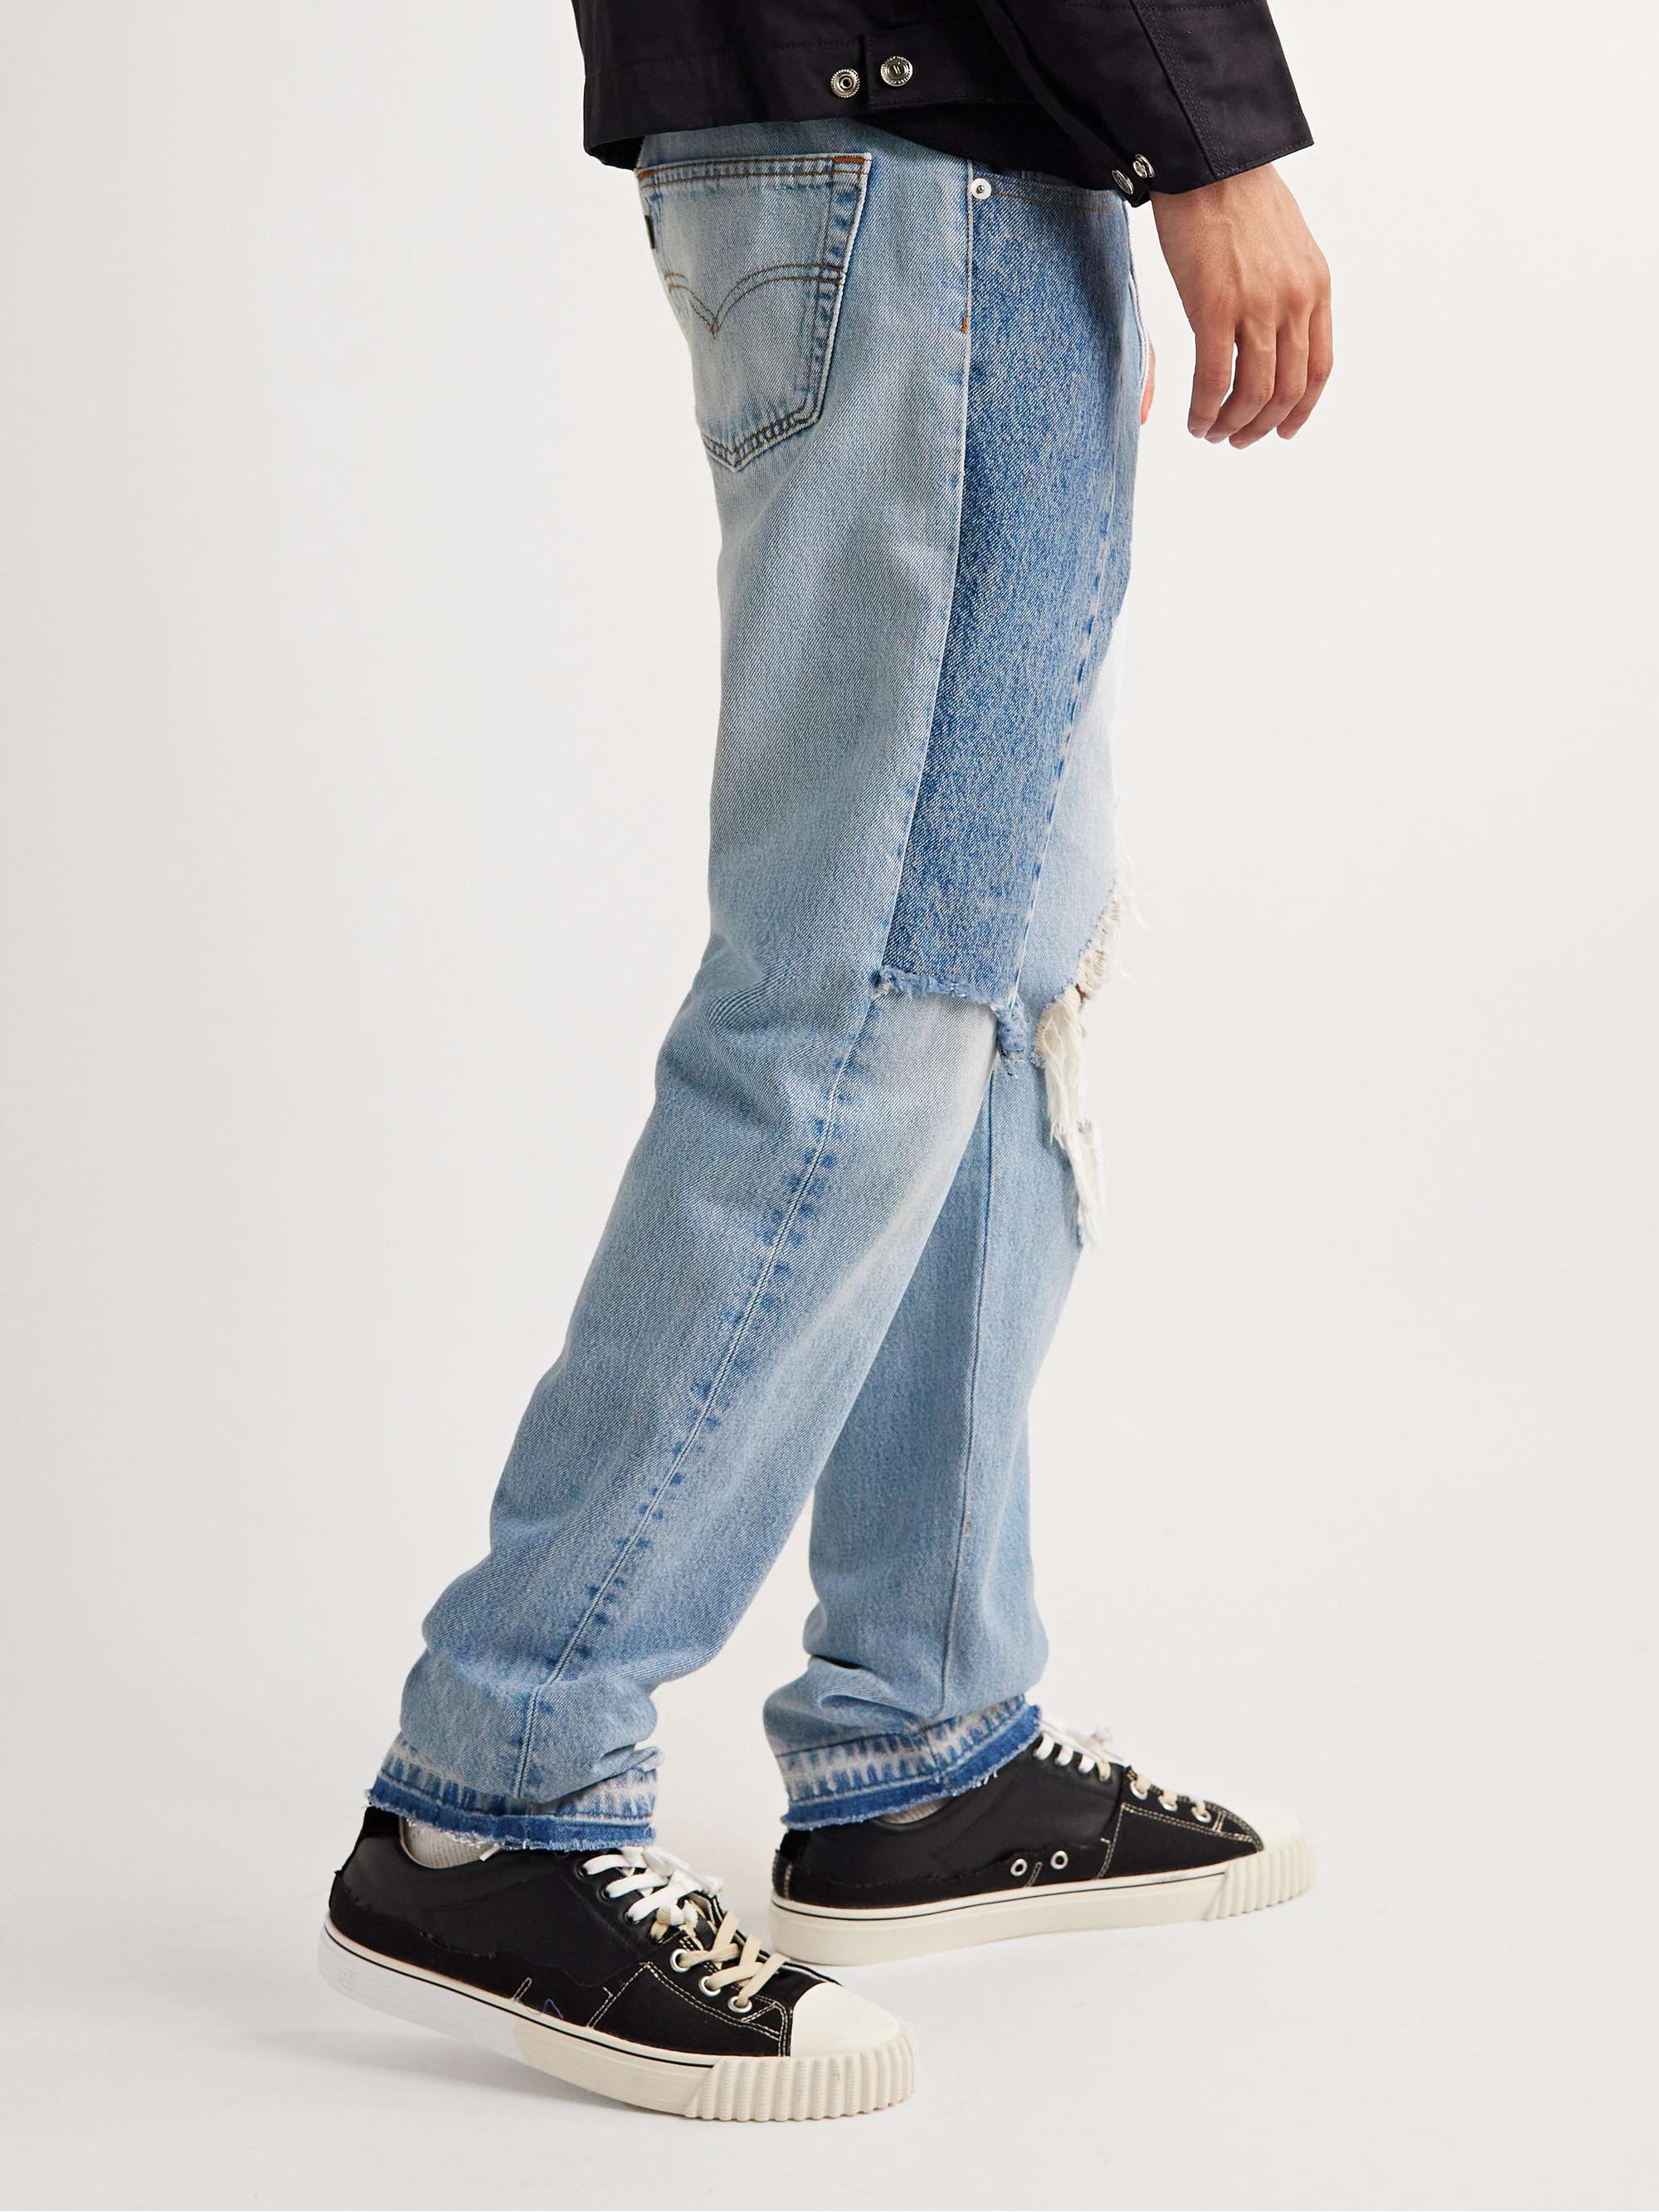 GALLERY DEPT. Ken Slim-Fit Panelled Distressed Jeans